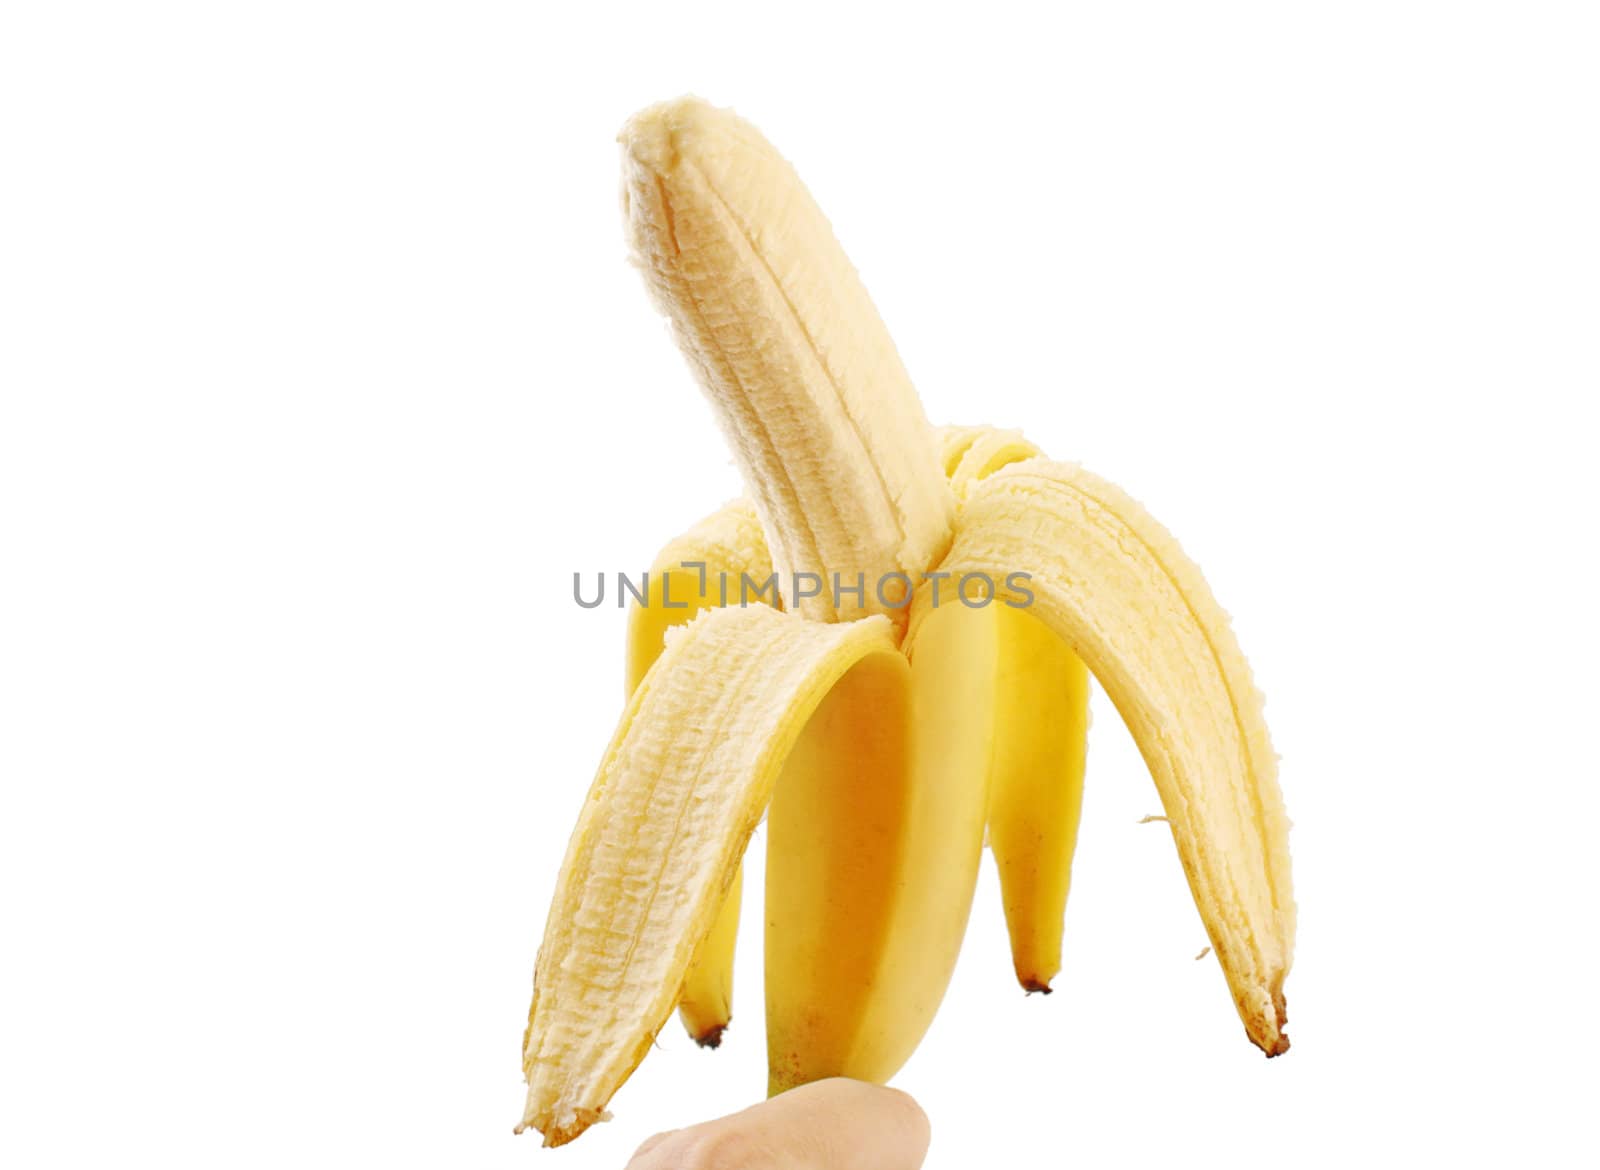 peeled banana by romantiche